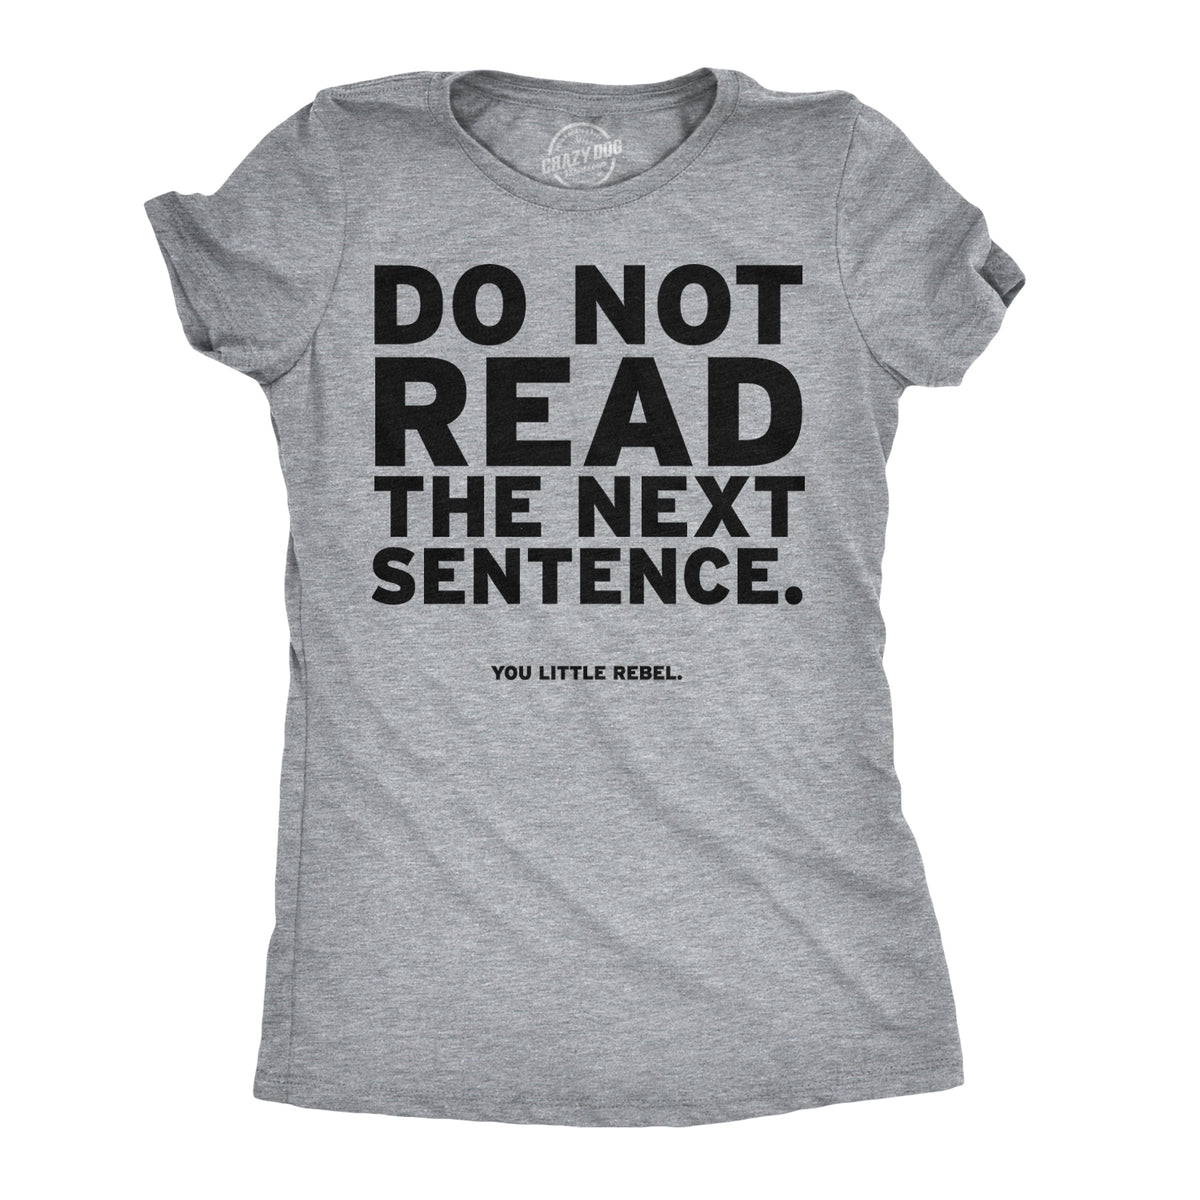 Funny Light Heather Grey Do Not Read The Next Sentence Womens T Shirt Nerdy Sarcastic Tee